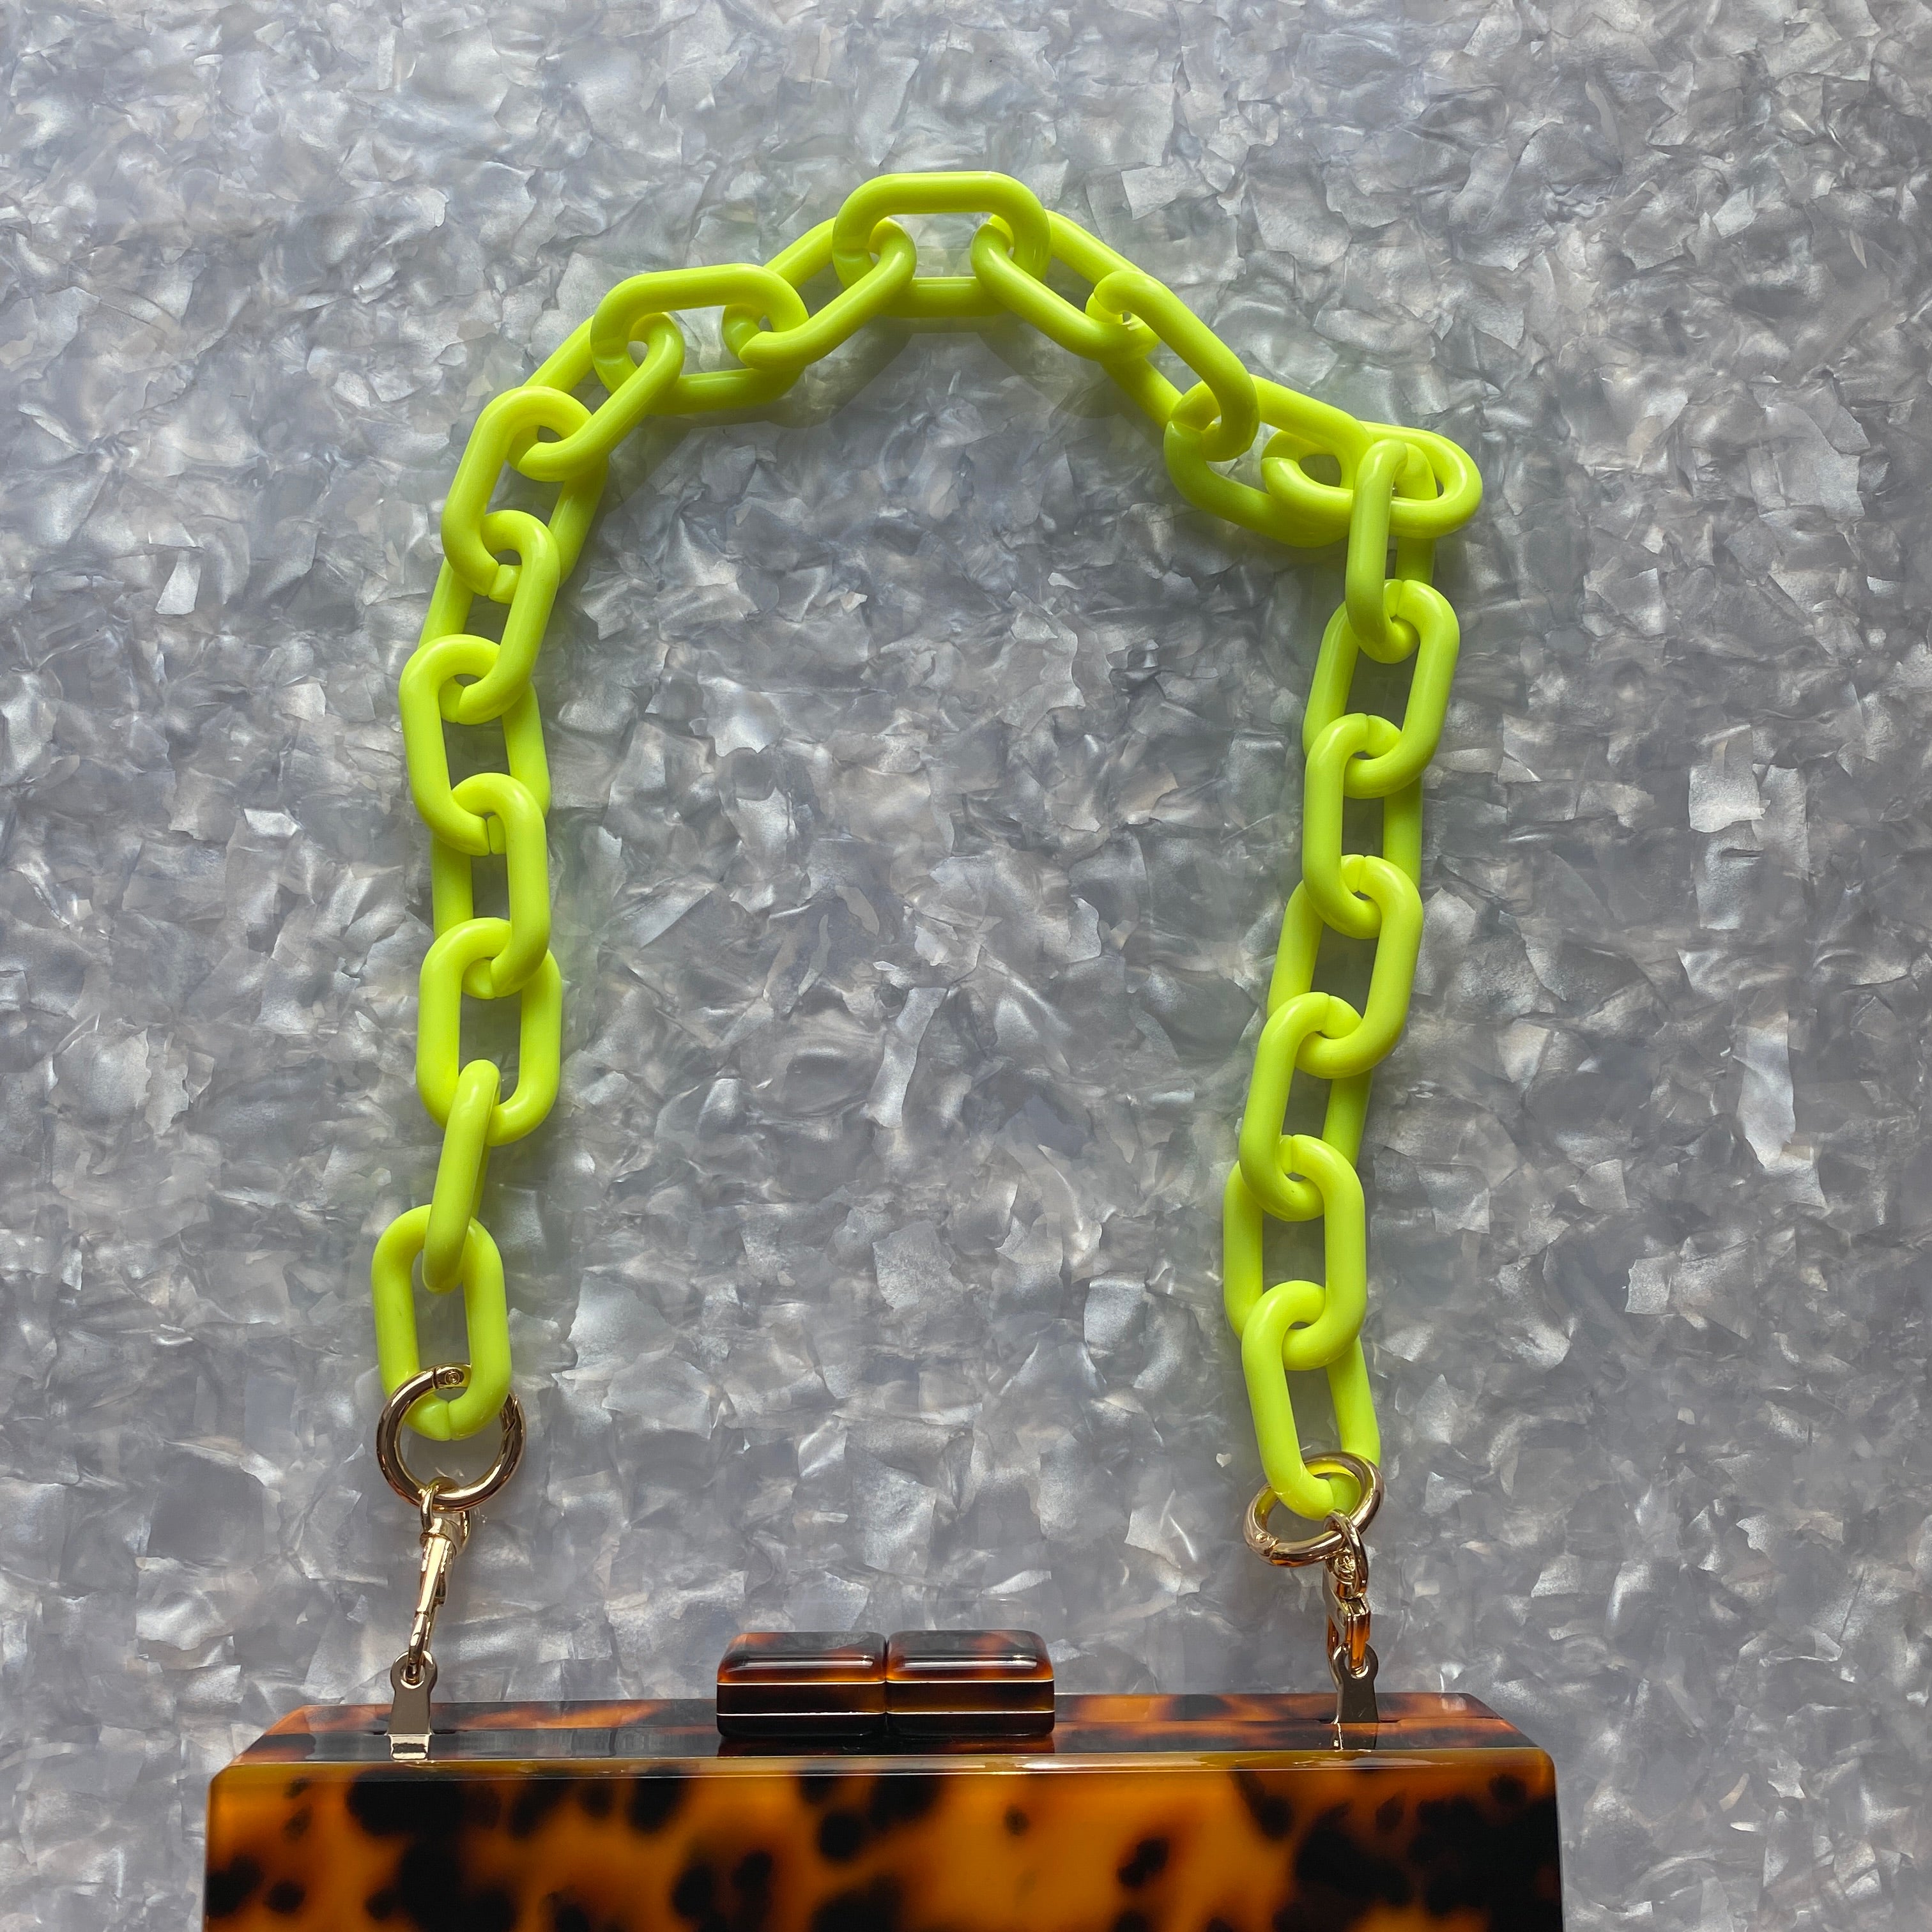 Colorful Neon Strap for Purse Handbag Yellow Magenta Fuchsia -  Denmark